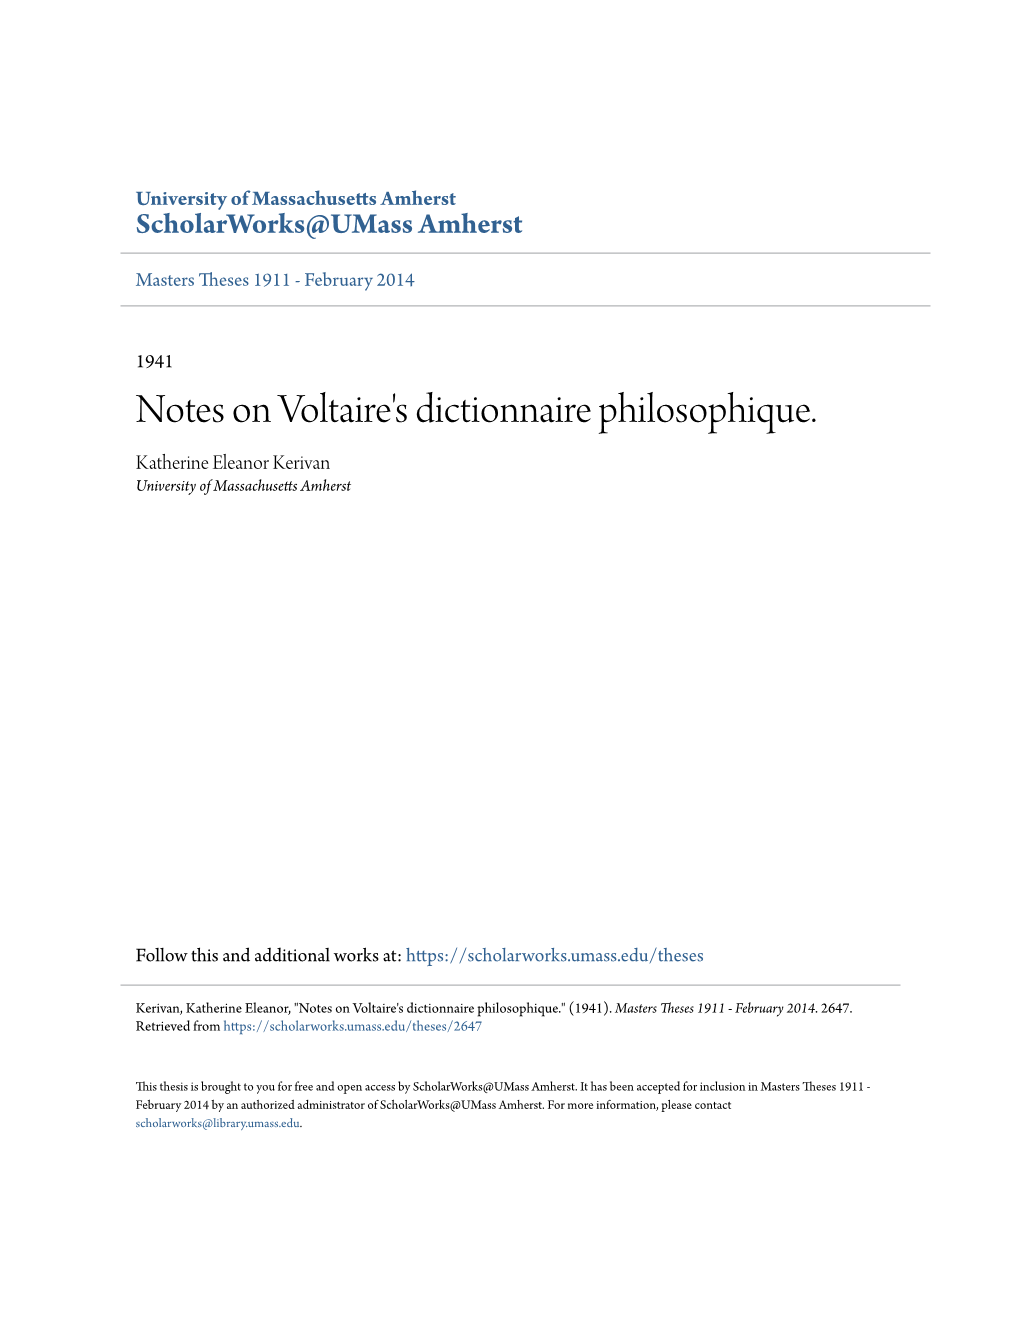 Notes on Voltaire's Dictionnaire Philosophique. Katherine Eleanor Kerivan University of Massachusetts Amherst